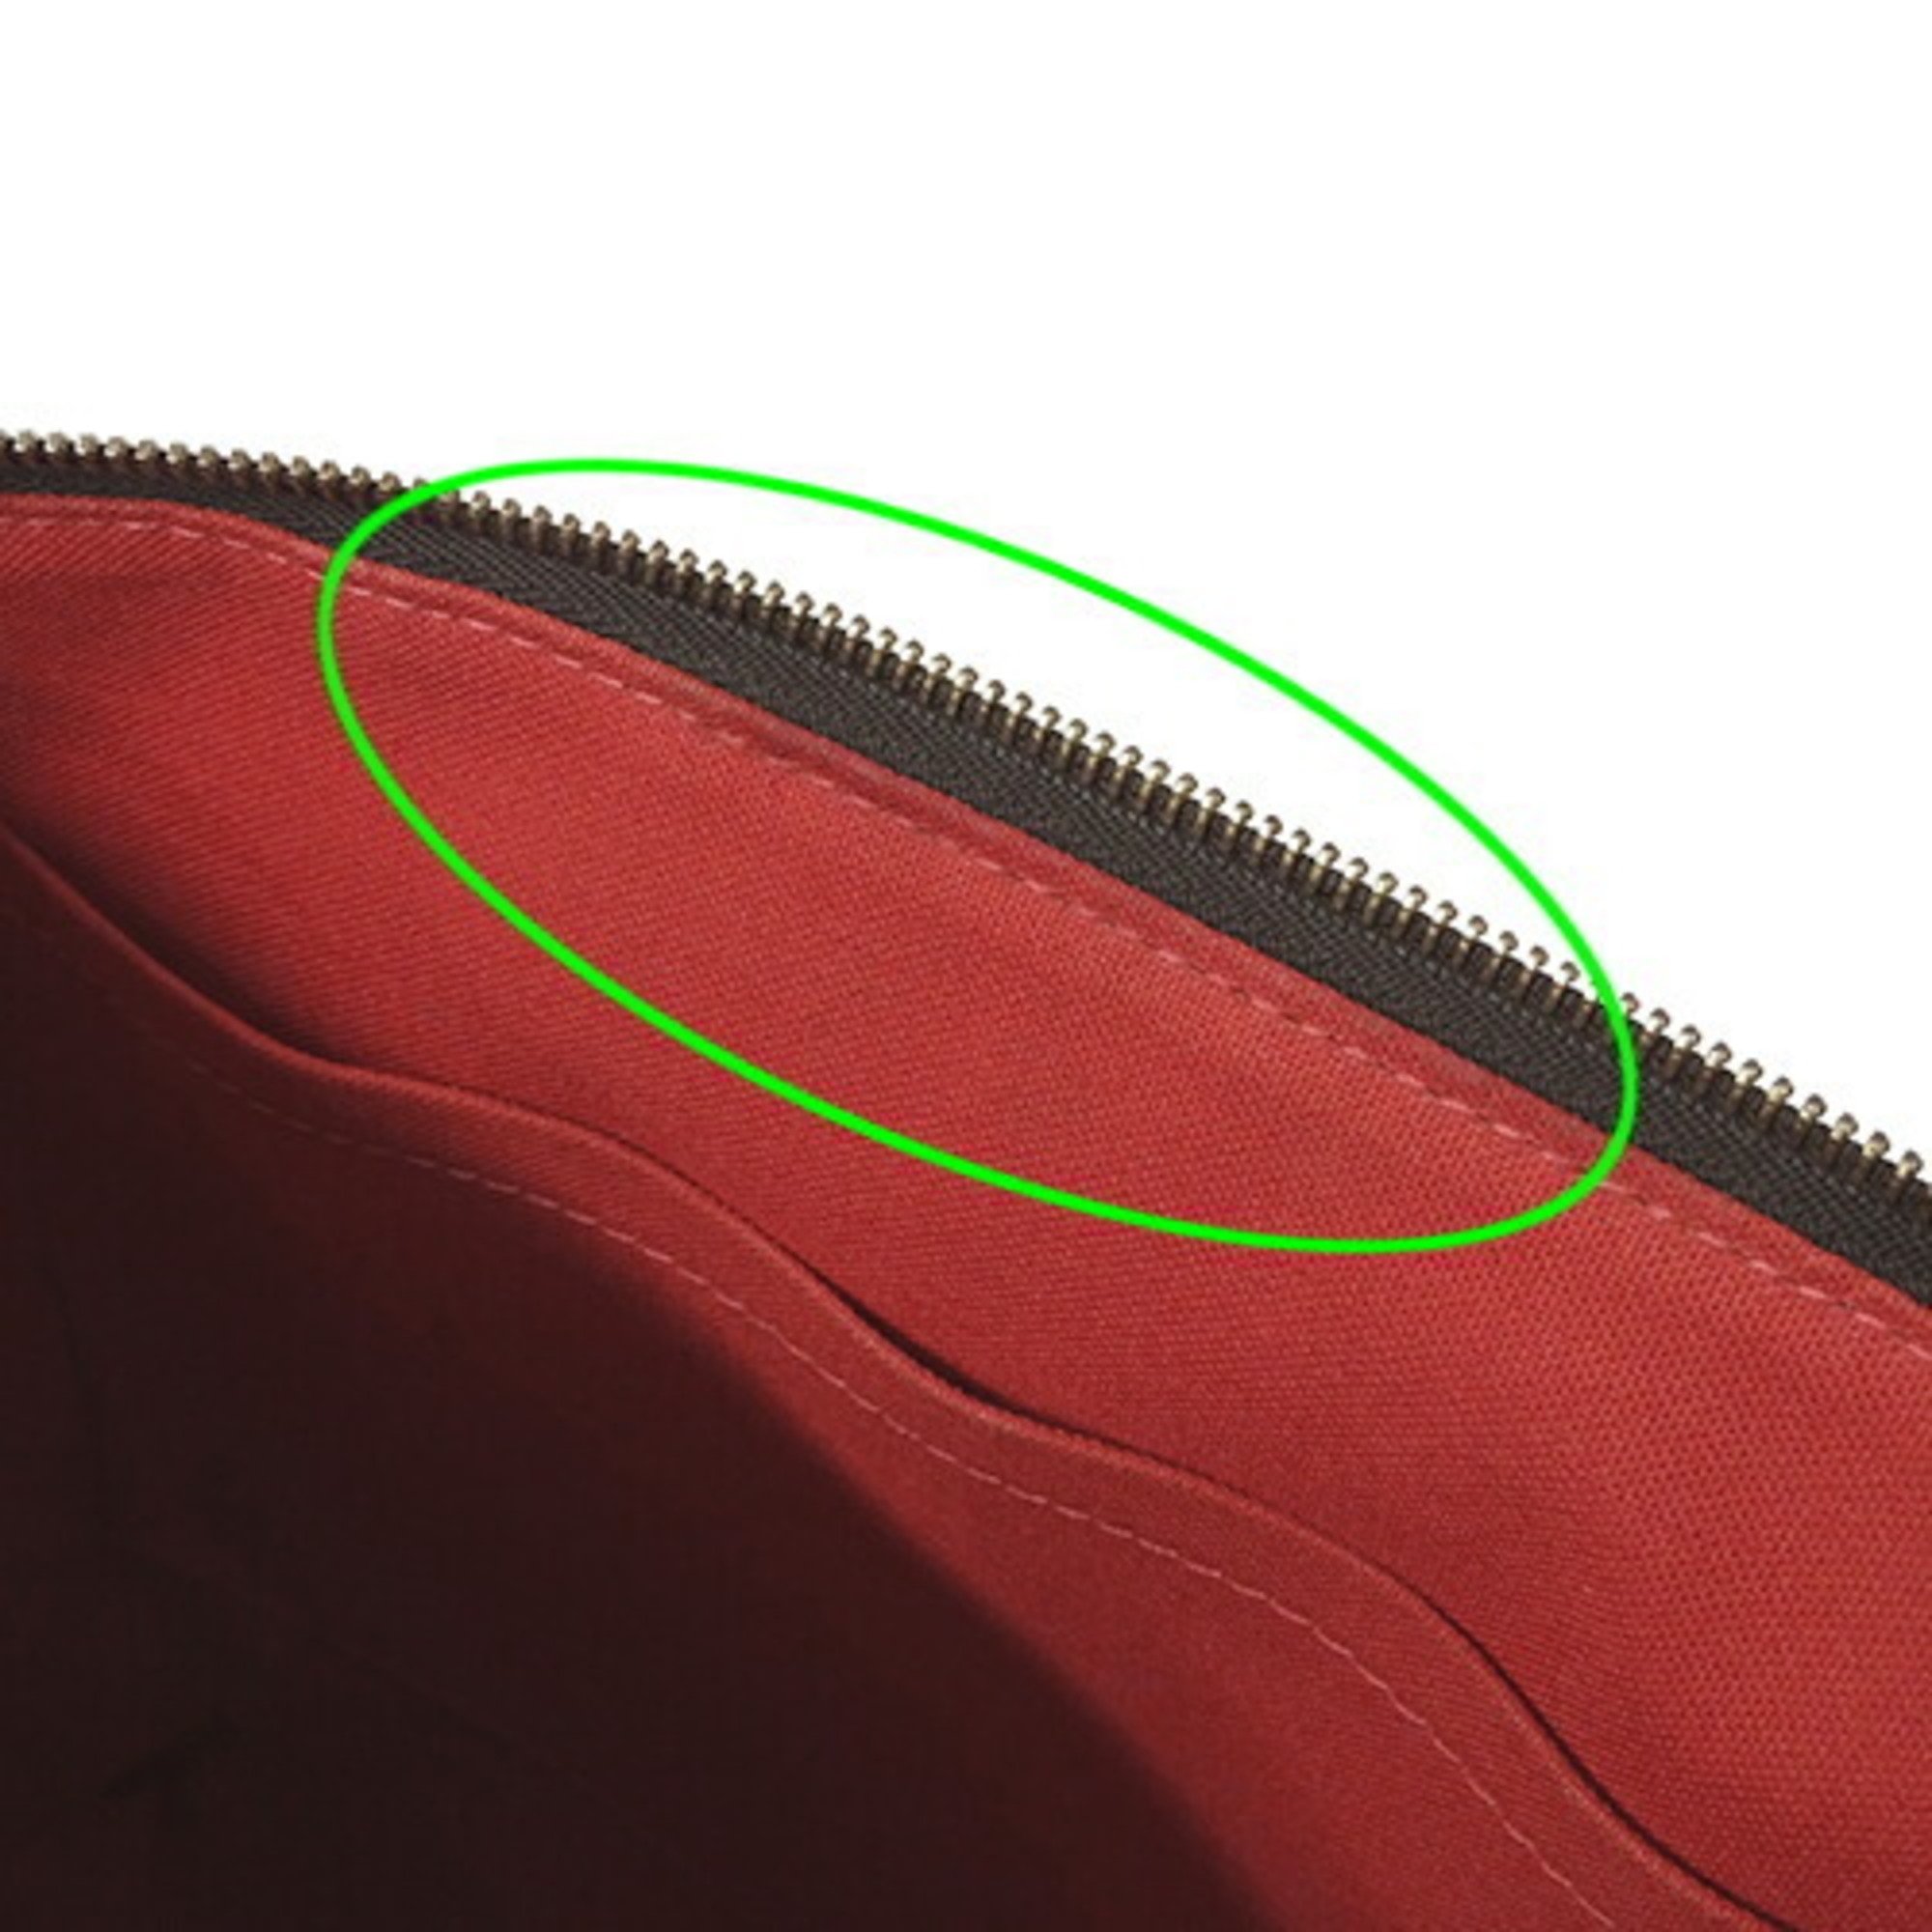 Louis Vuitton Damier Women's Tote Bag Totally PM N41282 Brown